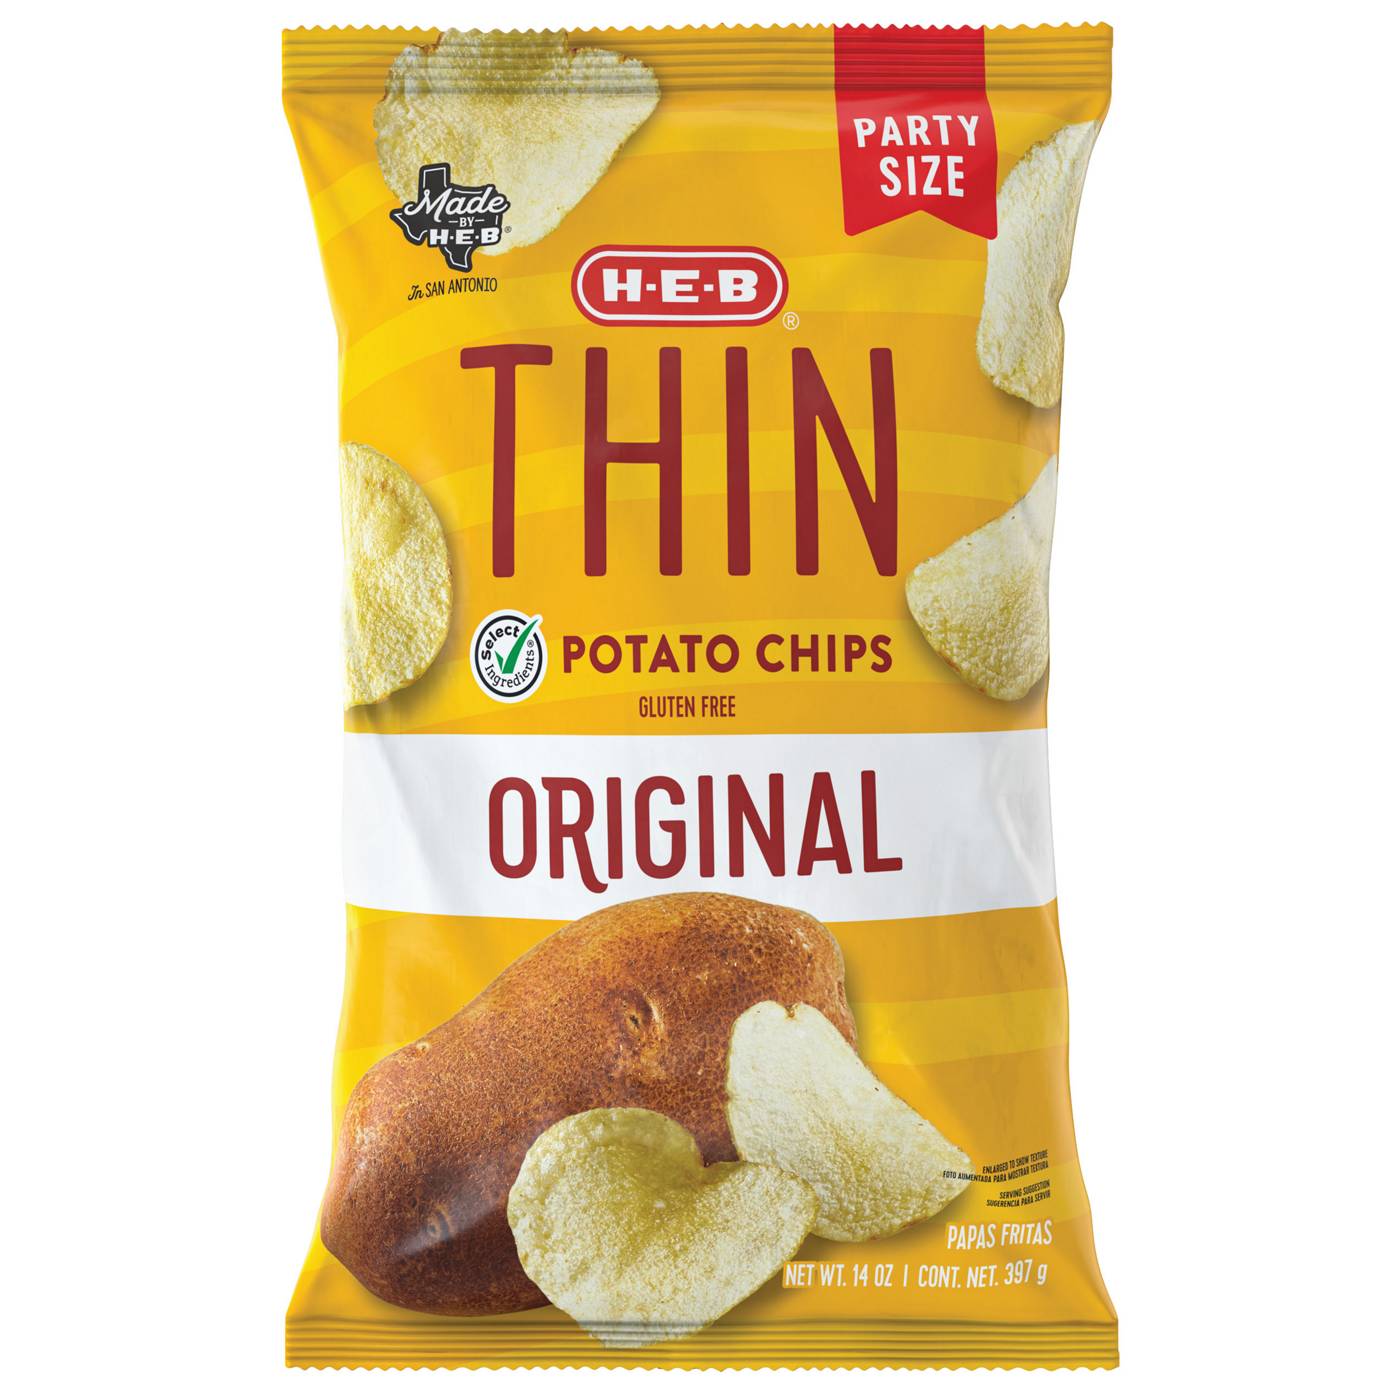 H-E-B Thin Potato Chips - Original, Party Size; image 1 of 2